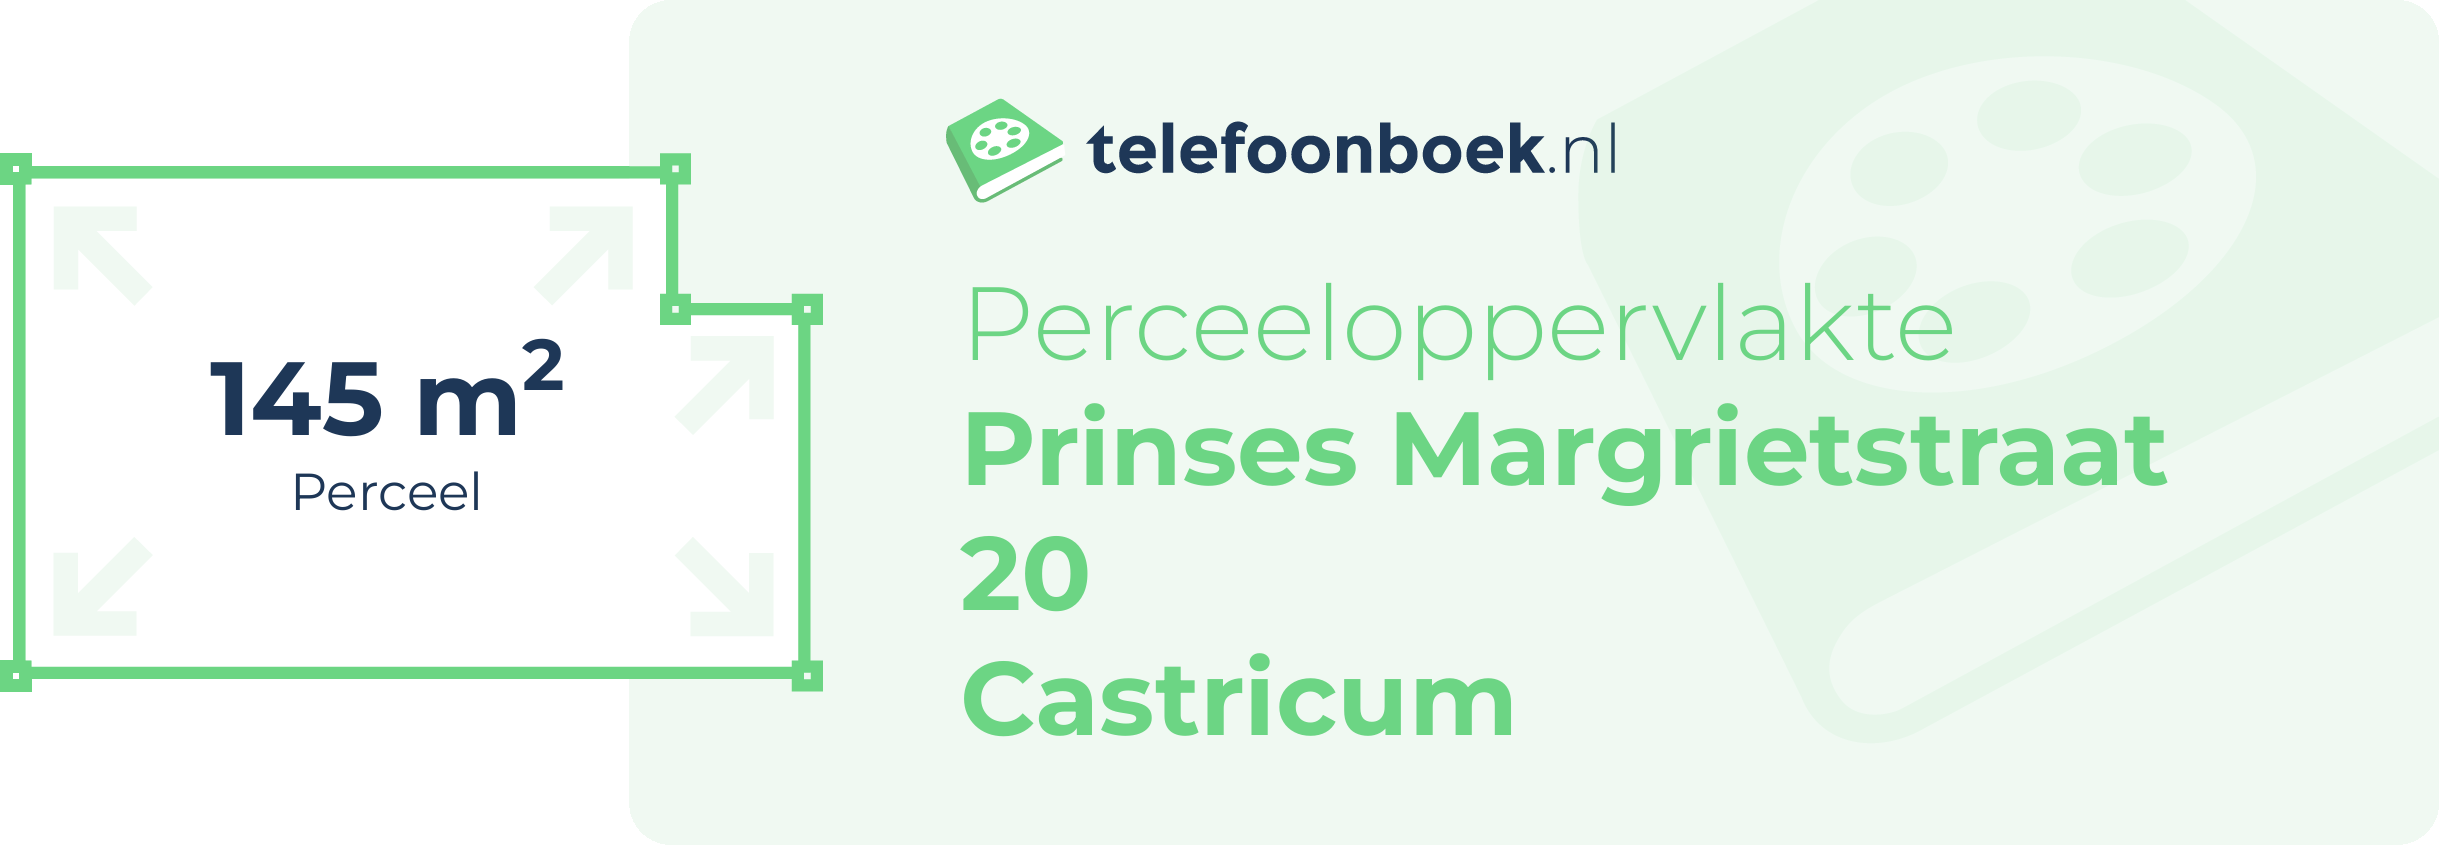 Perceeloppervlakte Prinses Margrietstraat 20 Castricum